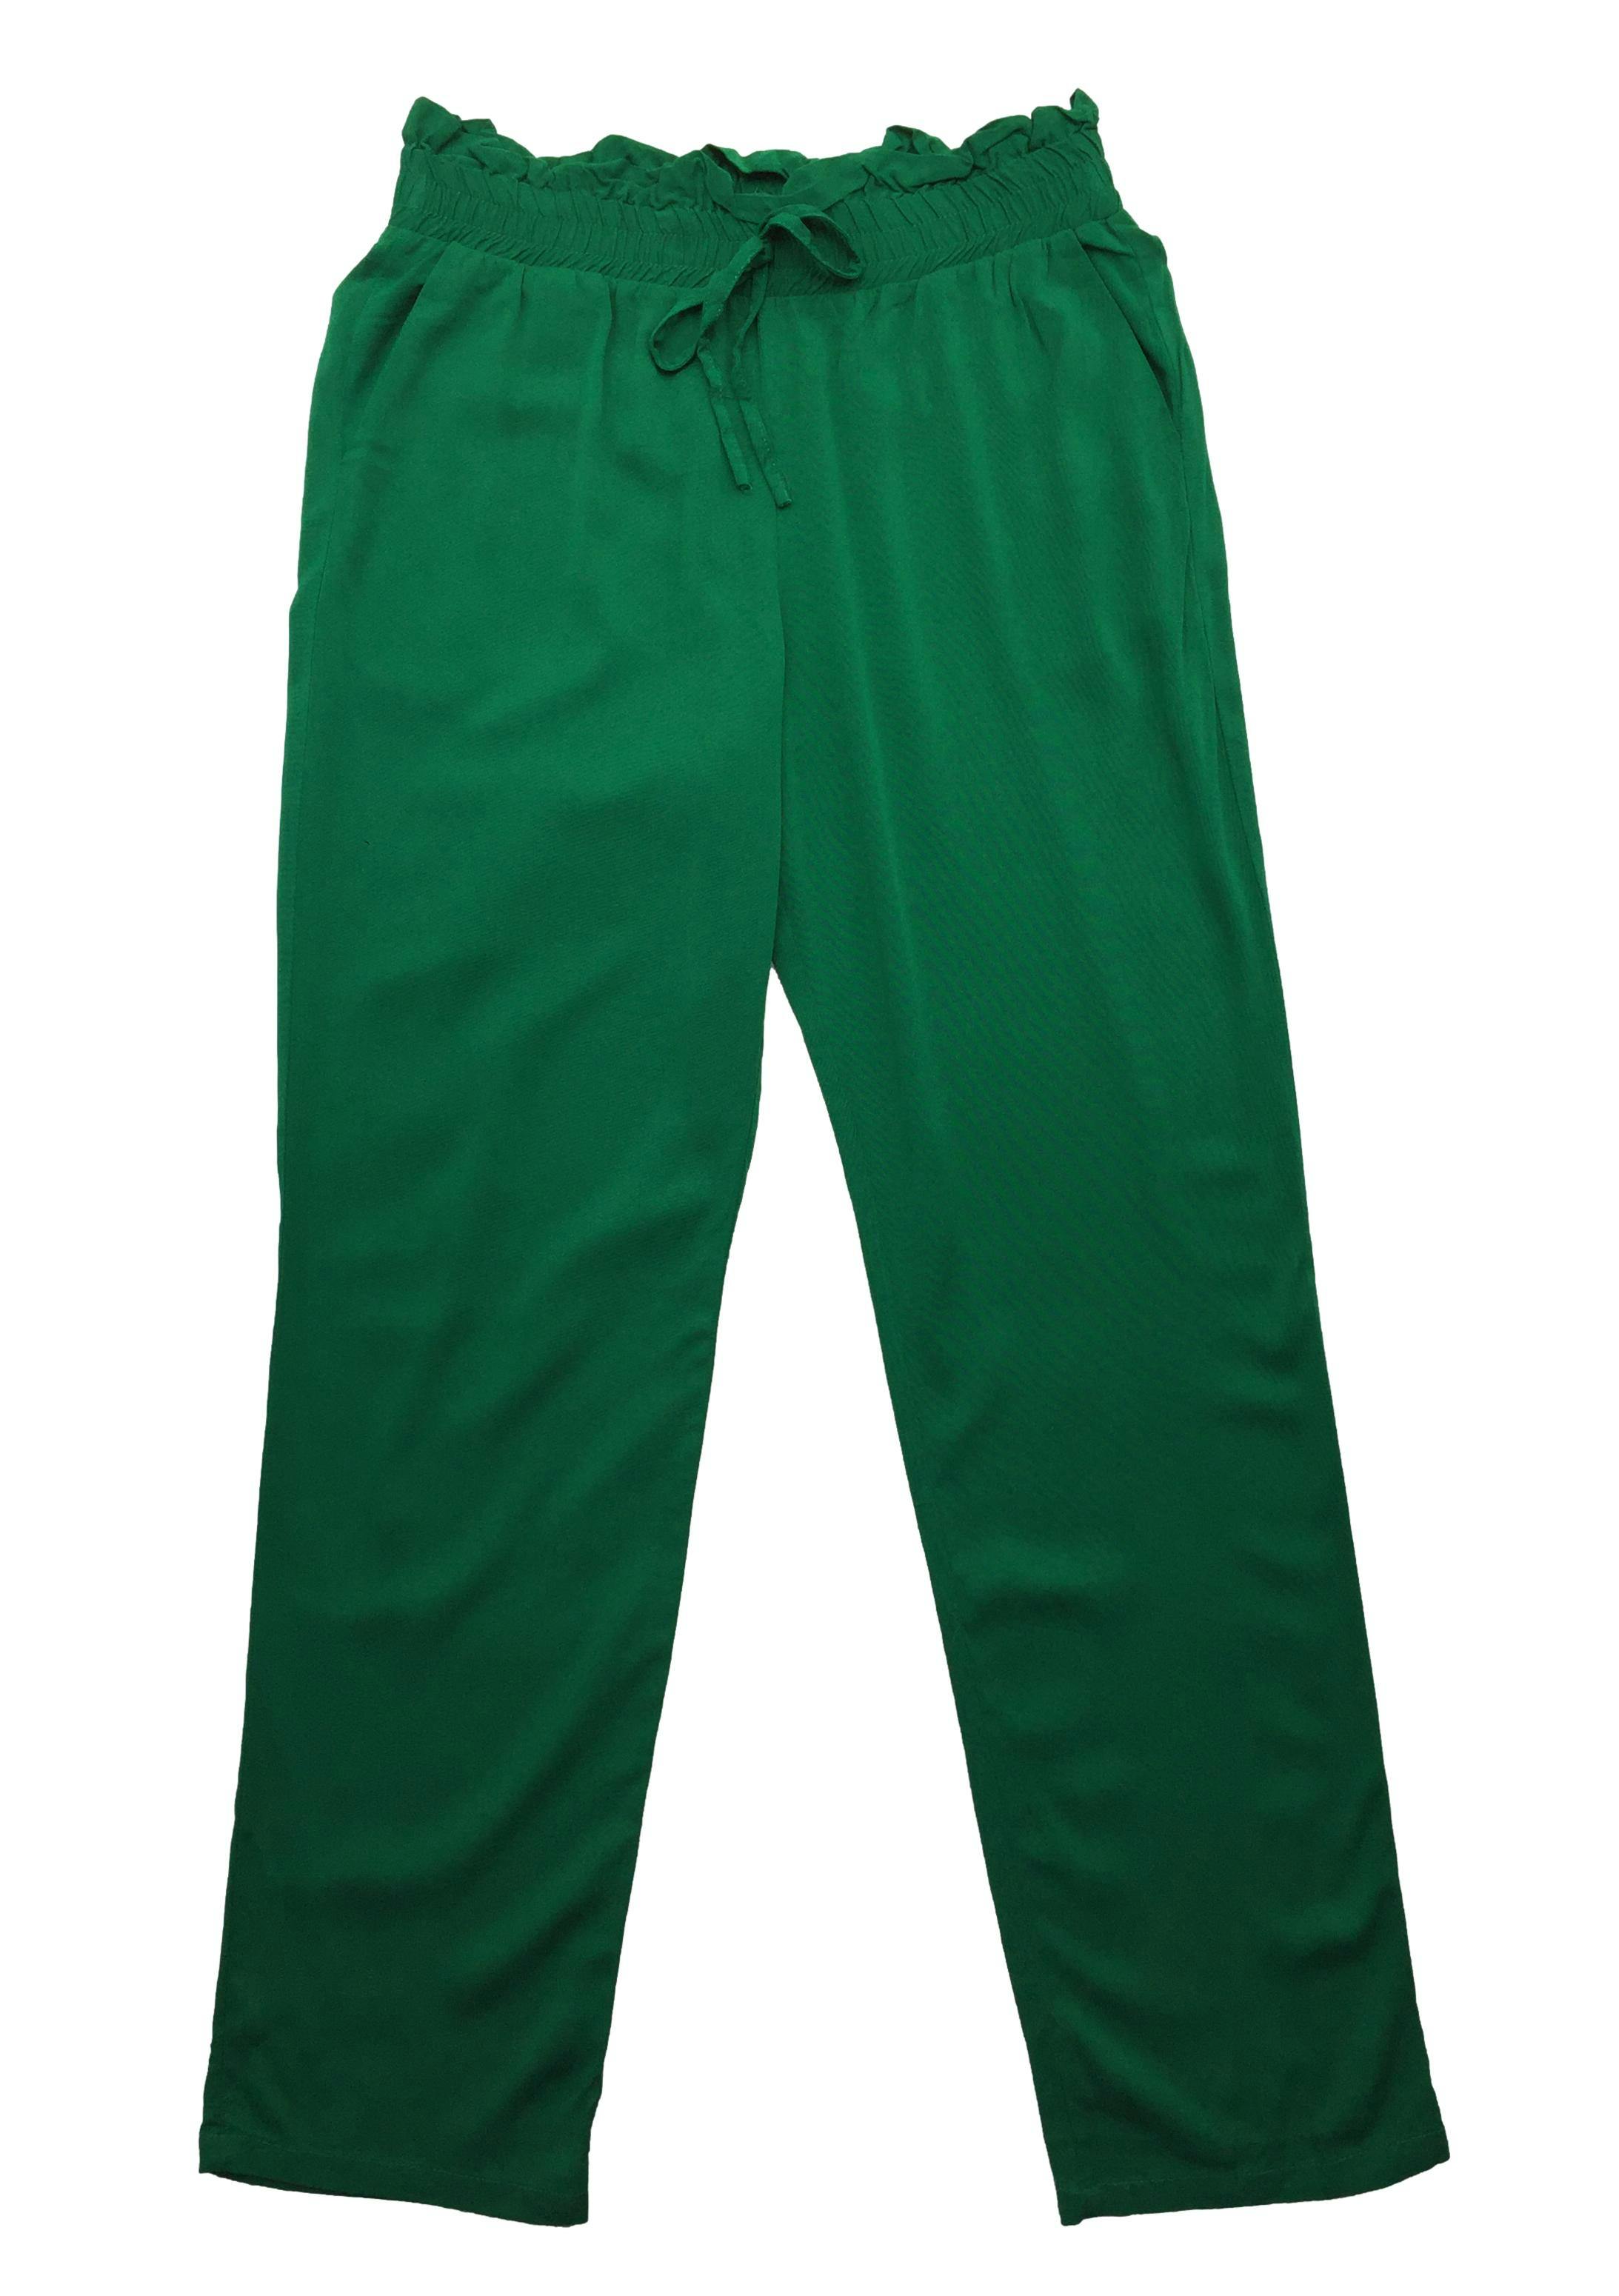 Pantalón Settimana verde, tela fresca, pretina y bolsillos laterales. Cintura 68cm Tiro 28cm Largo 92cm